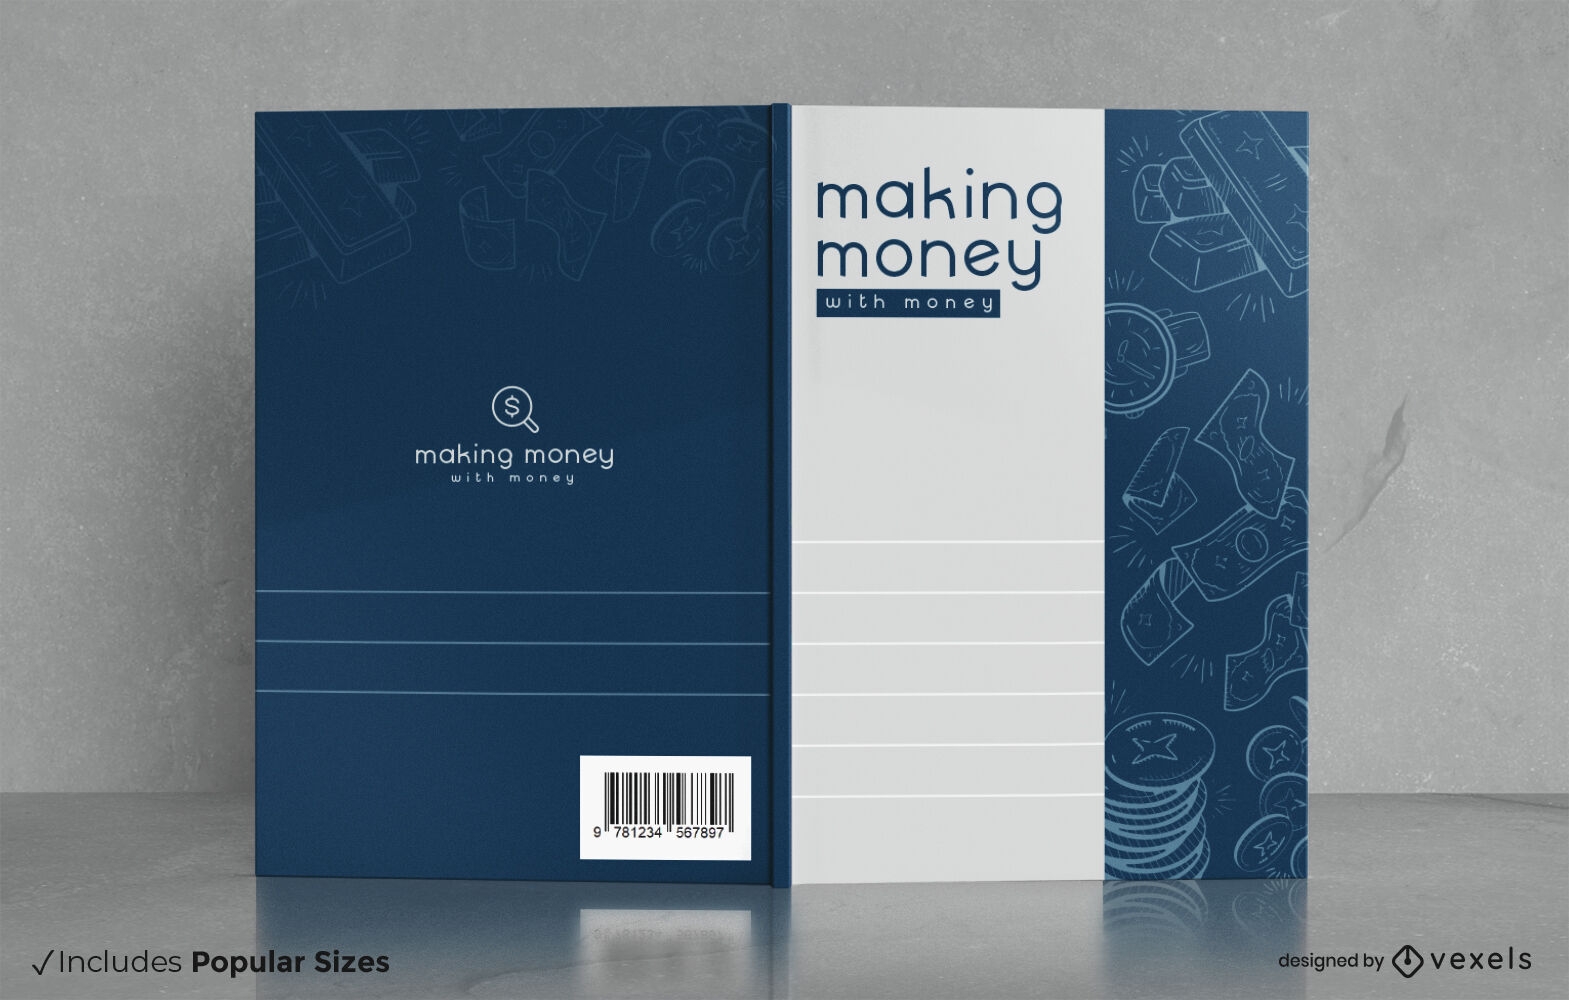 Making money book cover design